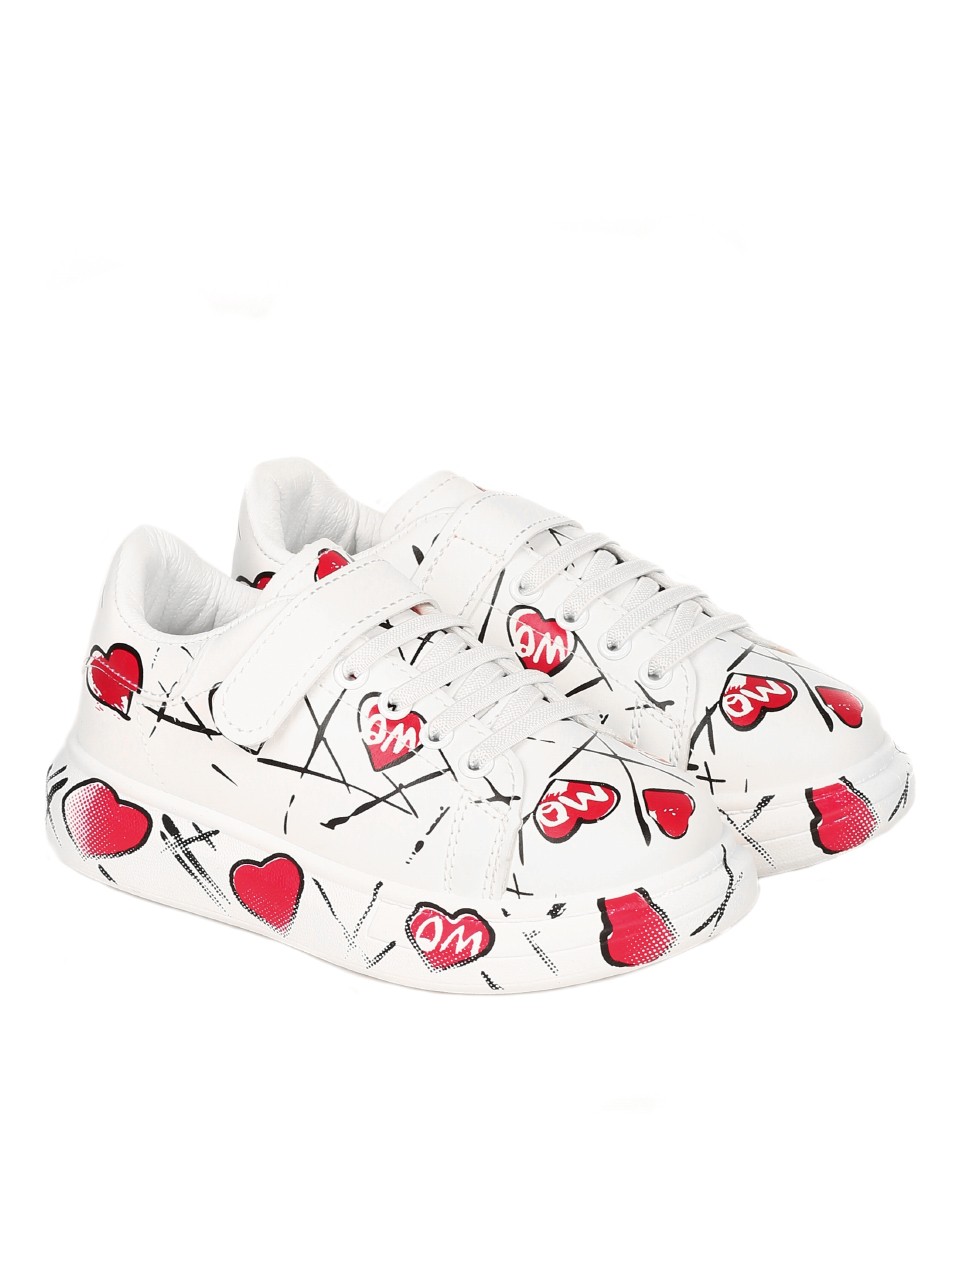 Ежедневни детски обувки в бяло и червено 18U-21692 white/red